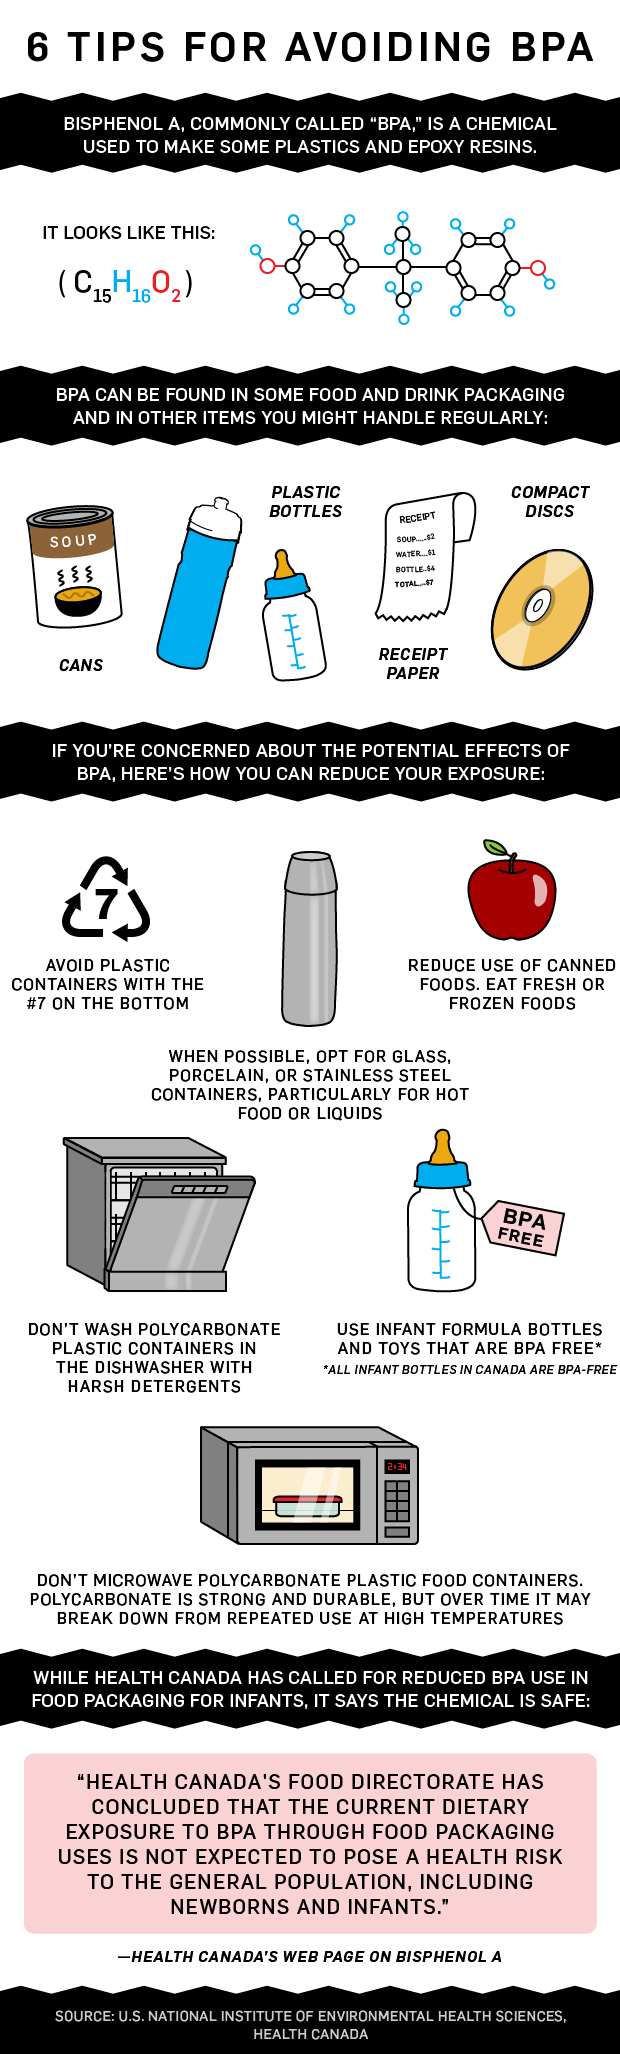 How to Avoid BPA Exposure